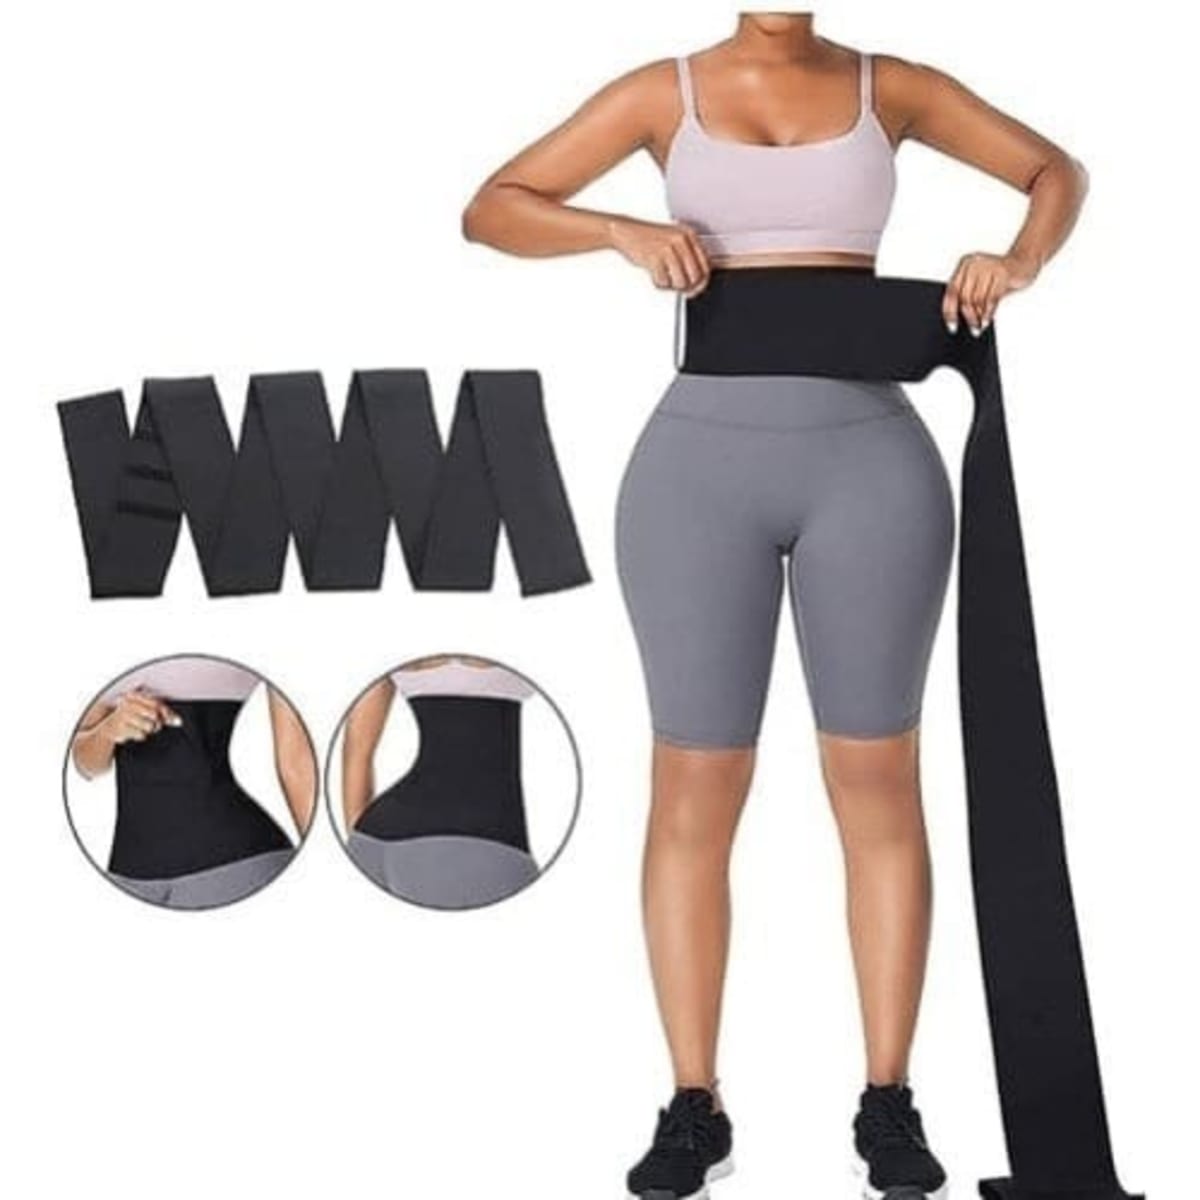 Waist Trainer Long Belt Tummy Wrap Slimming Belt And Free Skipping